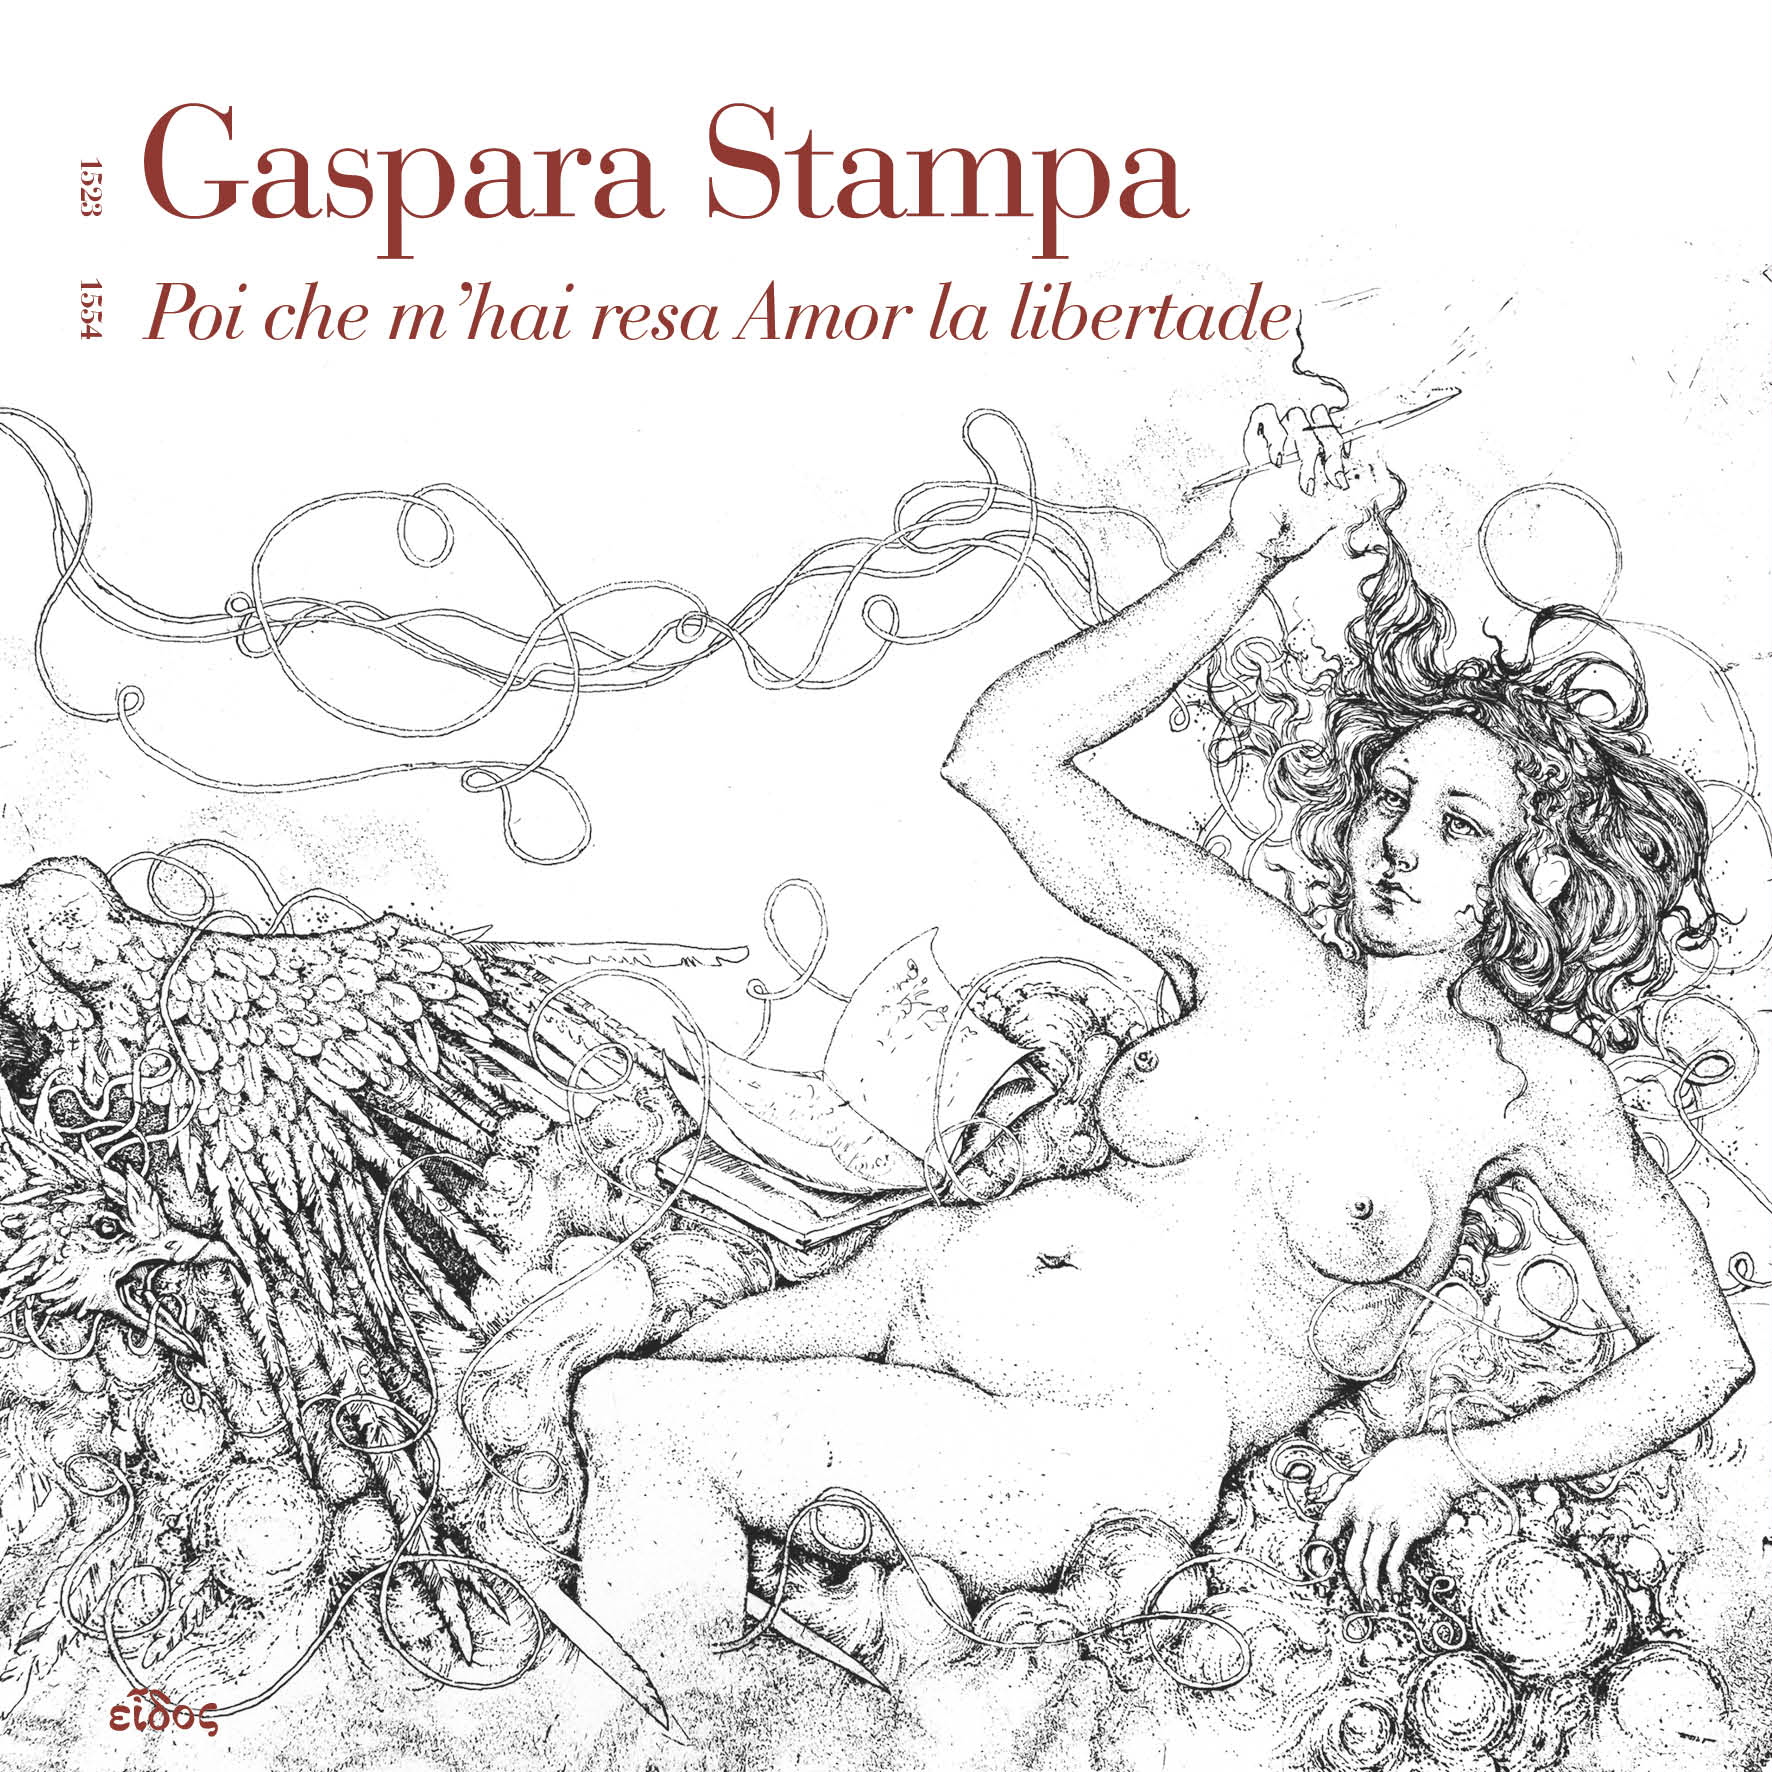 Gaspara Stampa - copertina libro Eidos